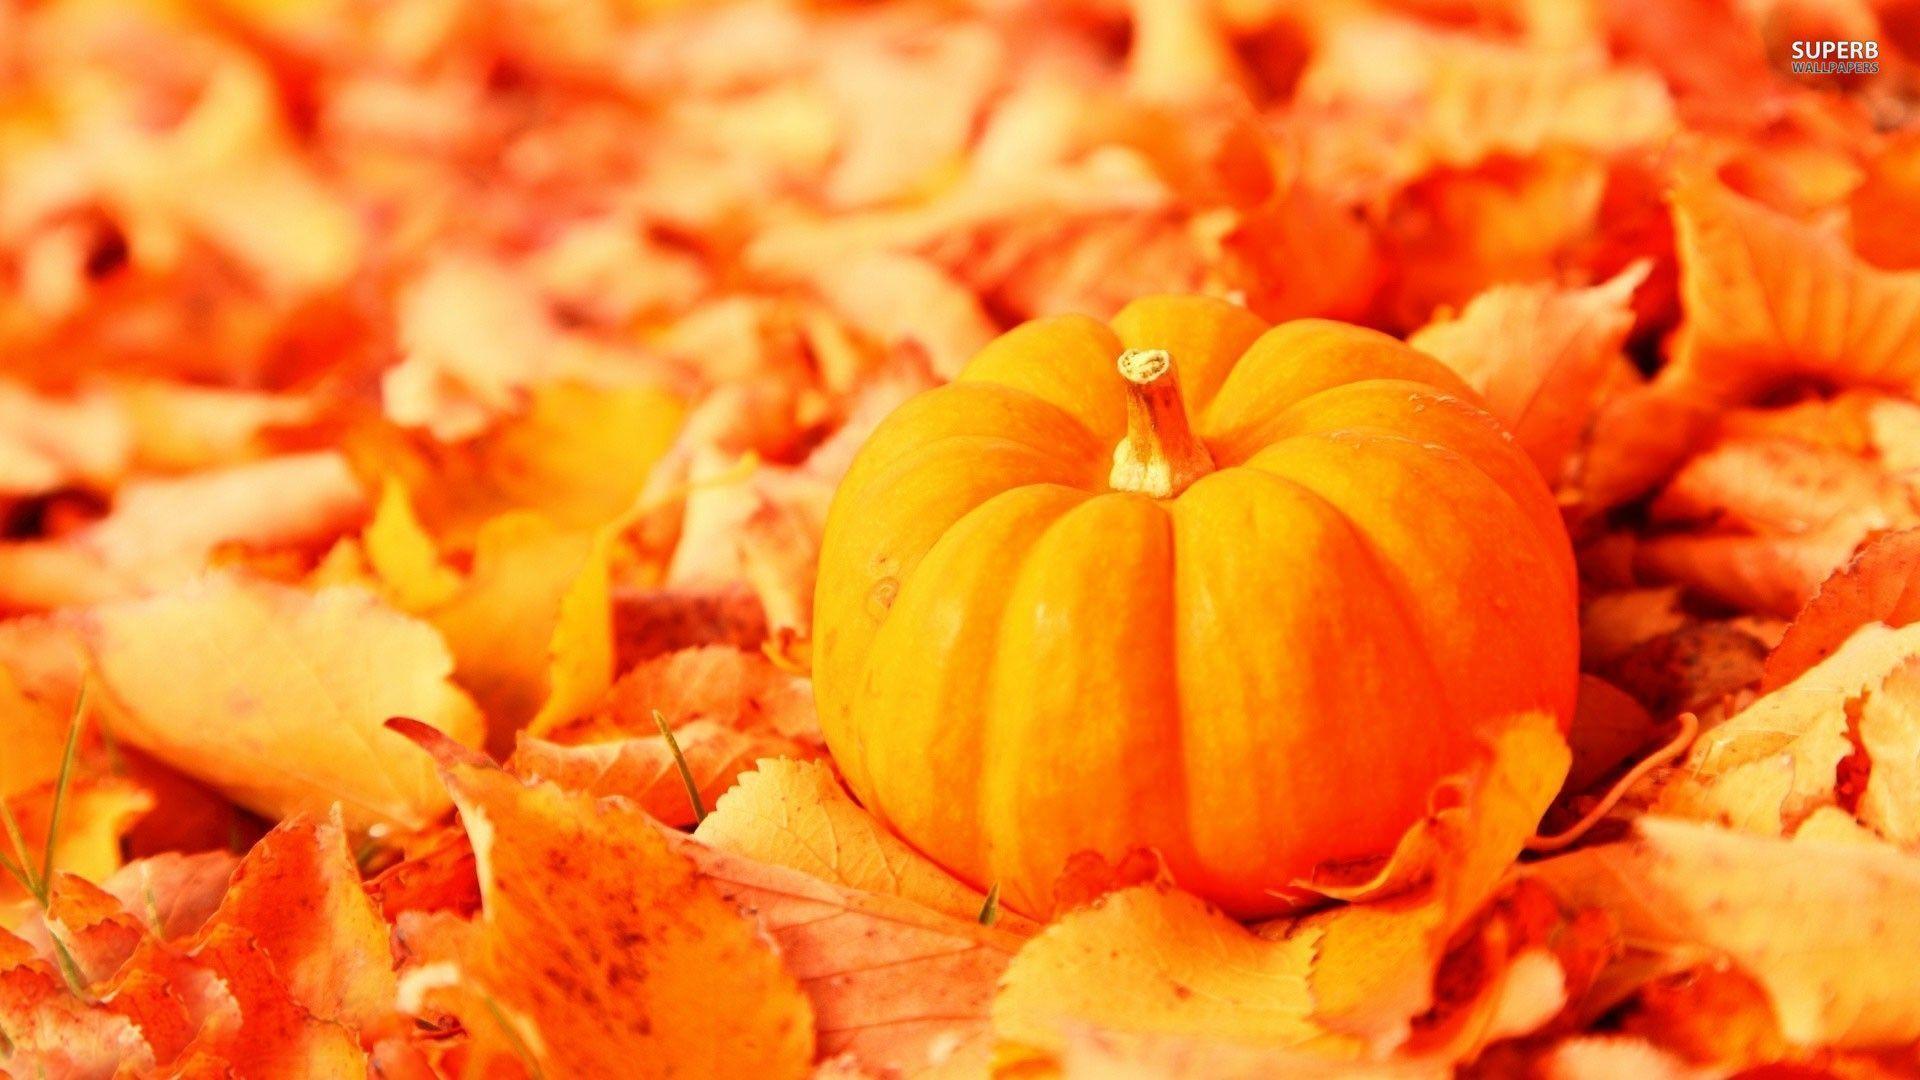 Pumpkin Among The Leaves 23989